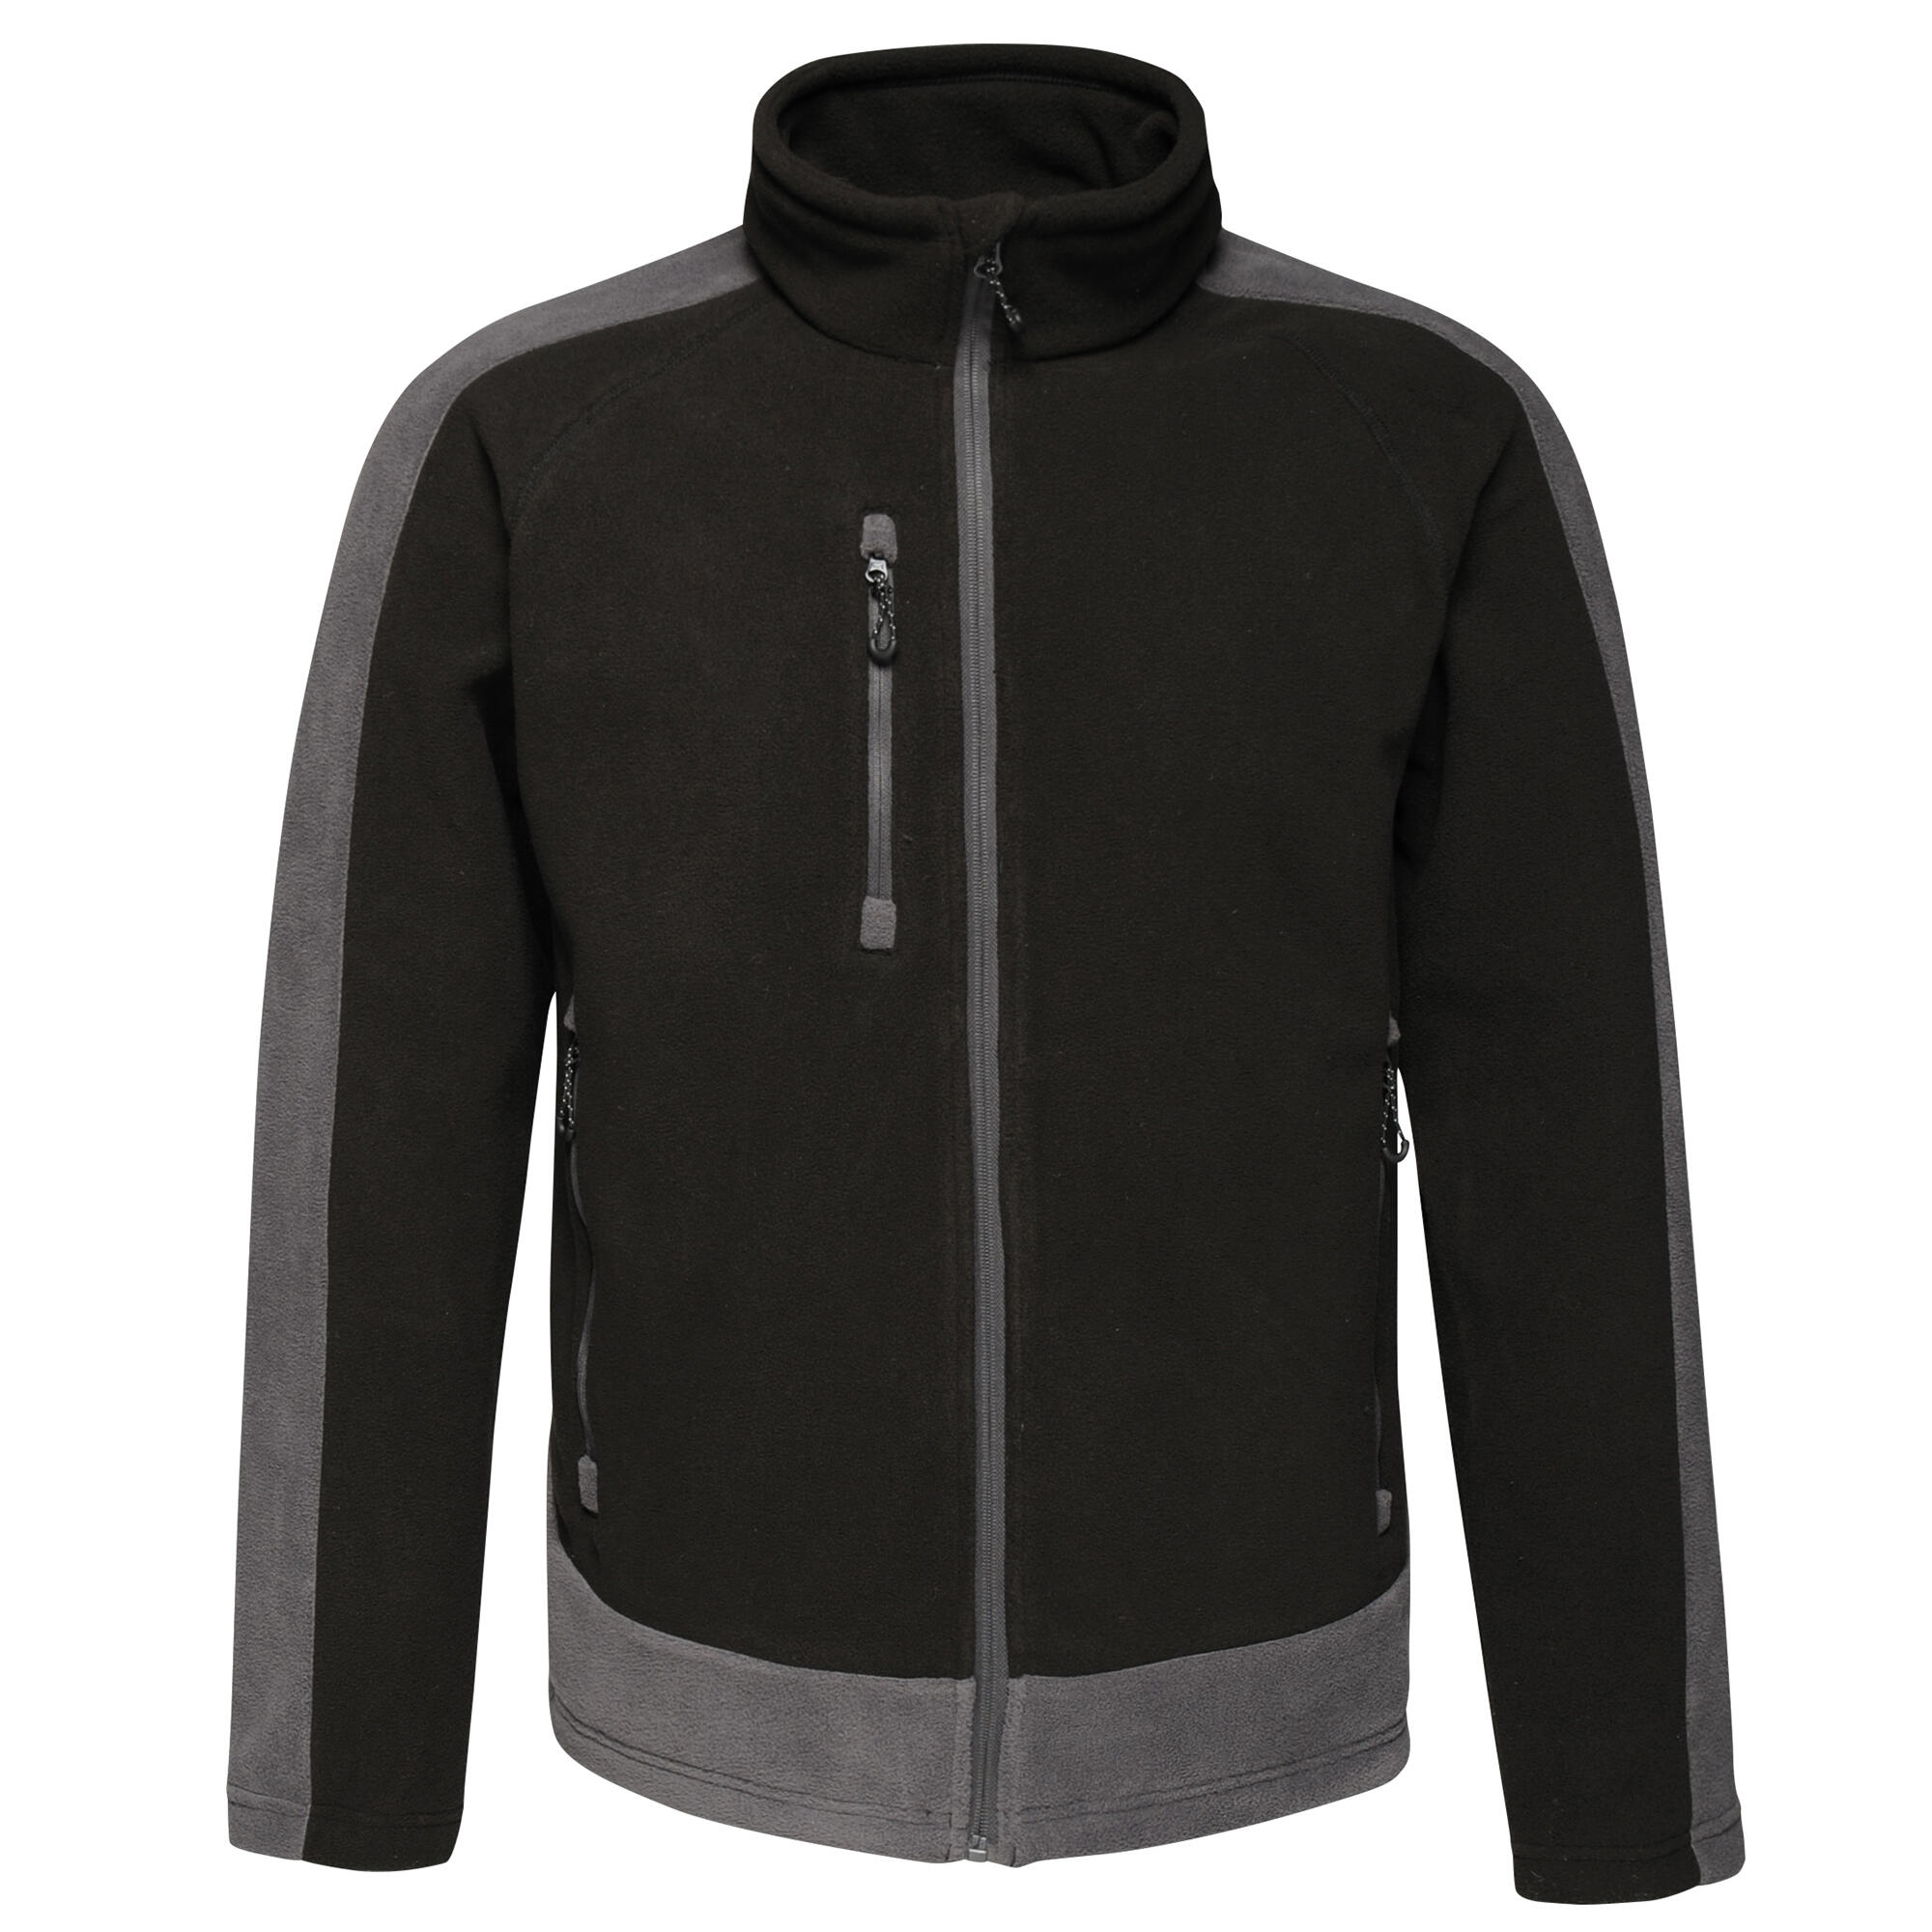 Contrast Mens 300 Fleece Top/jacket (black/seal) • SPORTAIGER